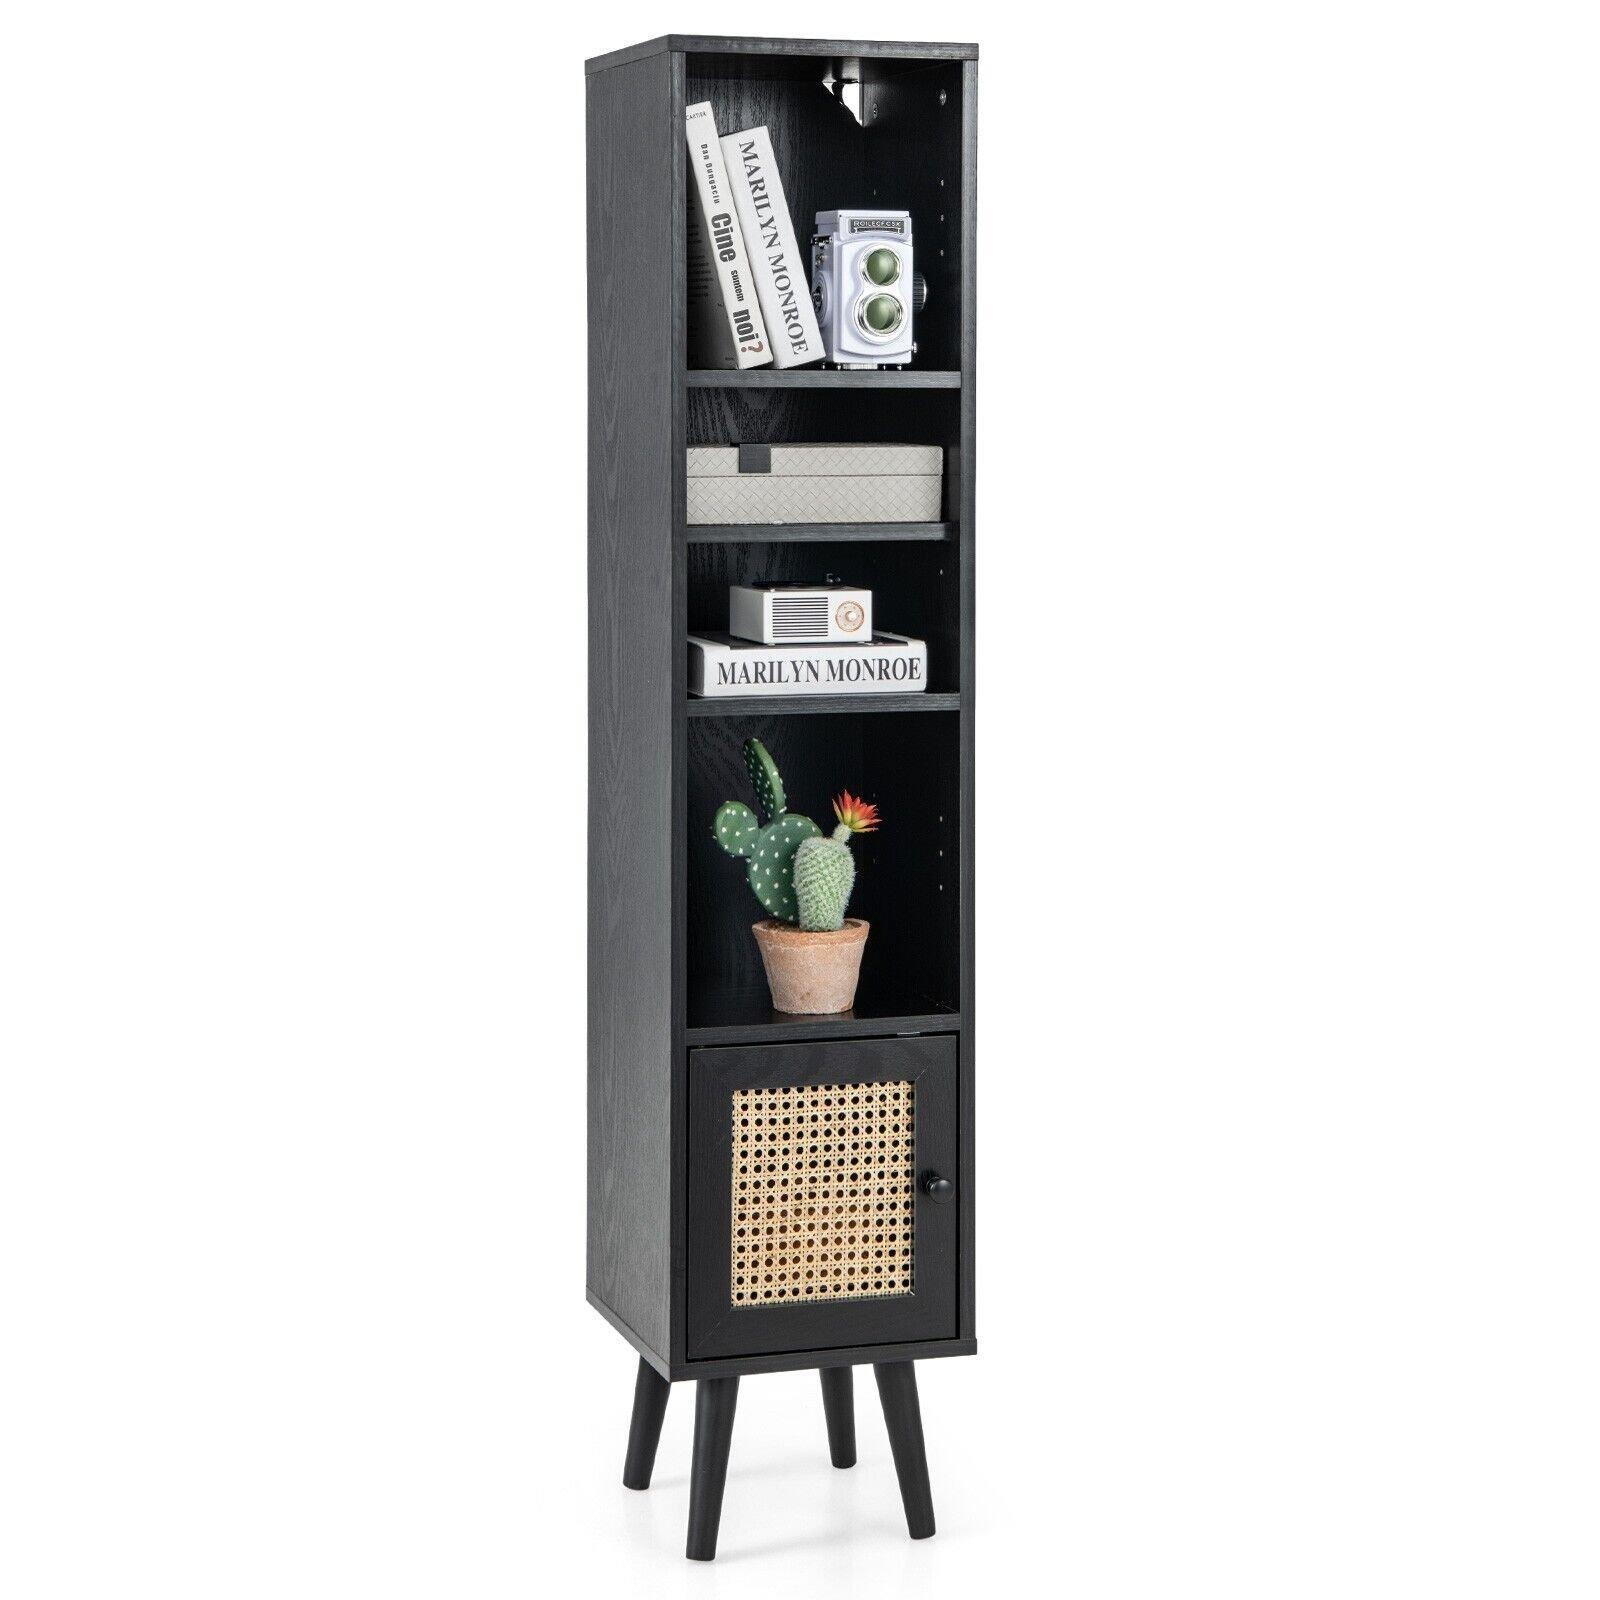 Narrow Bookshlef Slim Storage Dispaly Cabinet with 12-Position Adjustable Shelf - image 1